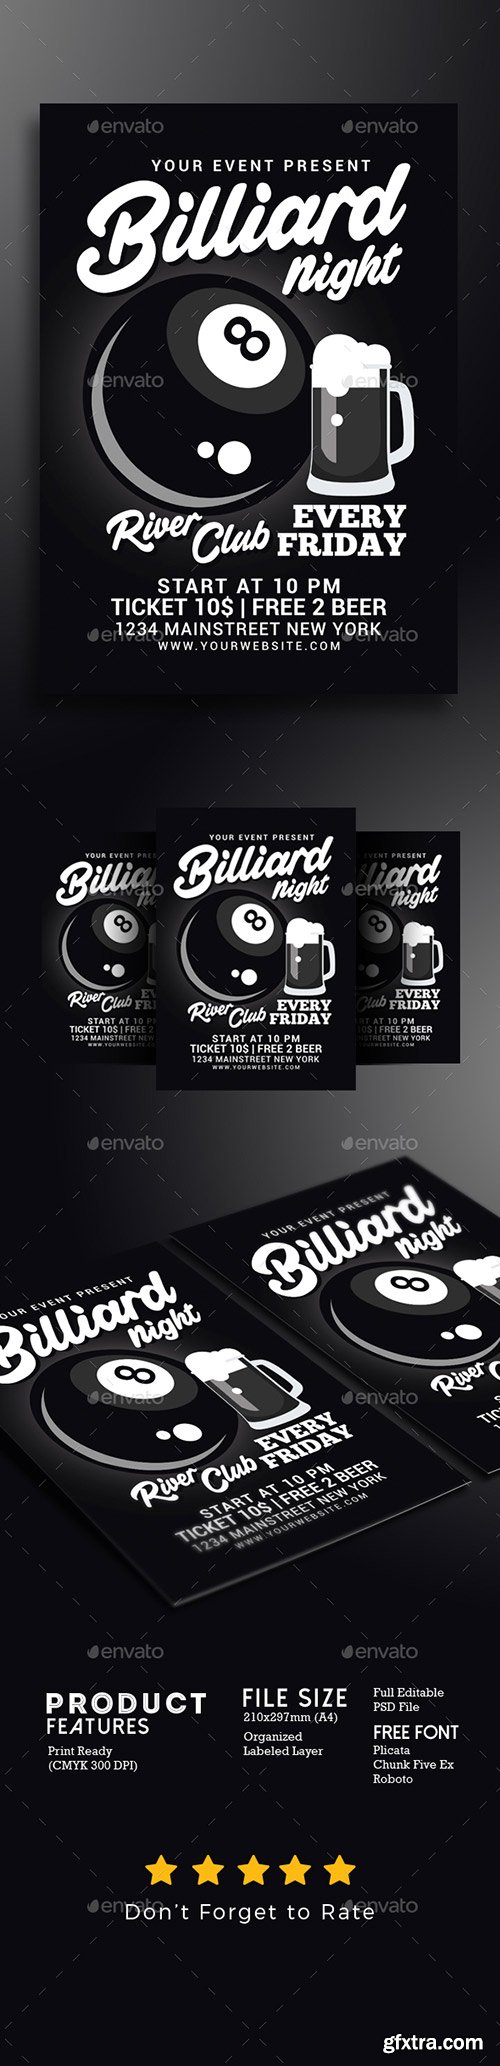 Graphicriver - Billiard Night Flyer 19930252